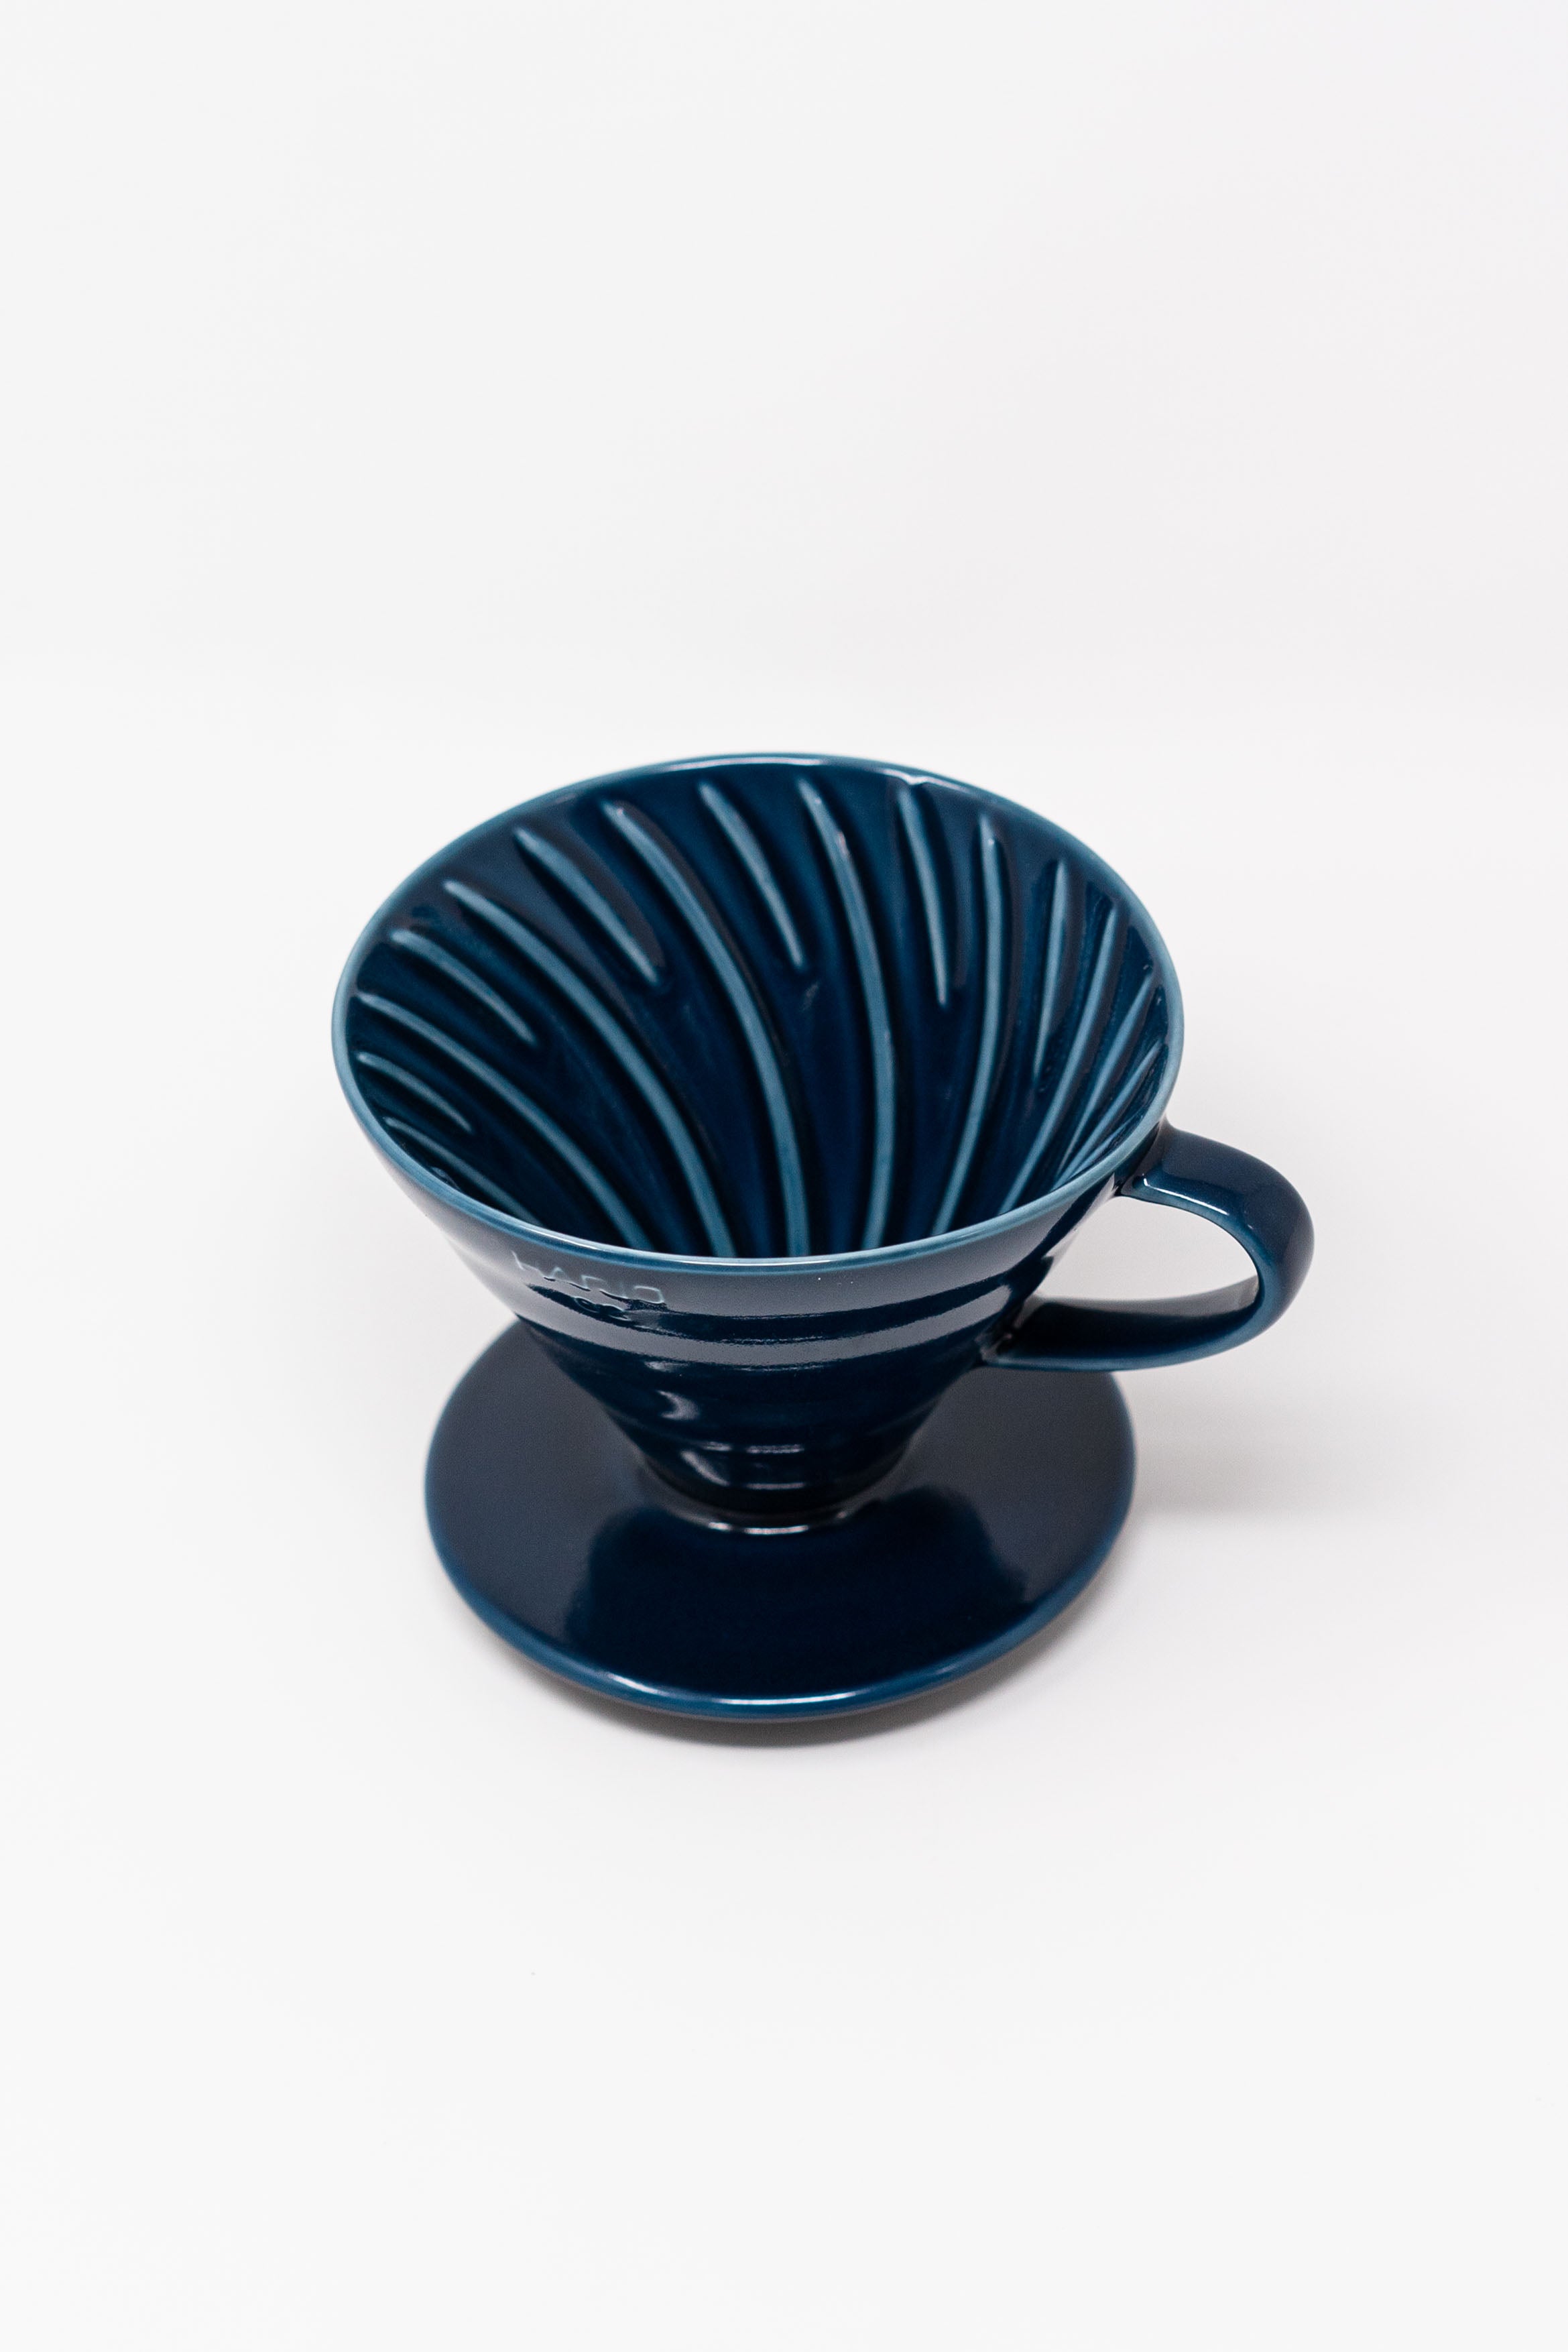 Ceramic Pour Over Coffee Maker – RichlandHub